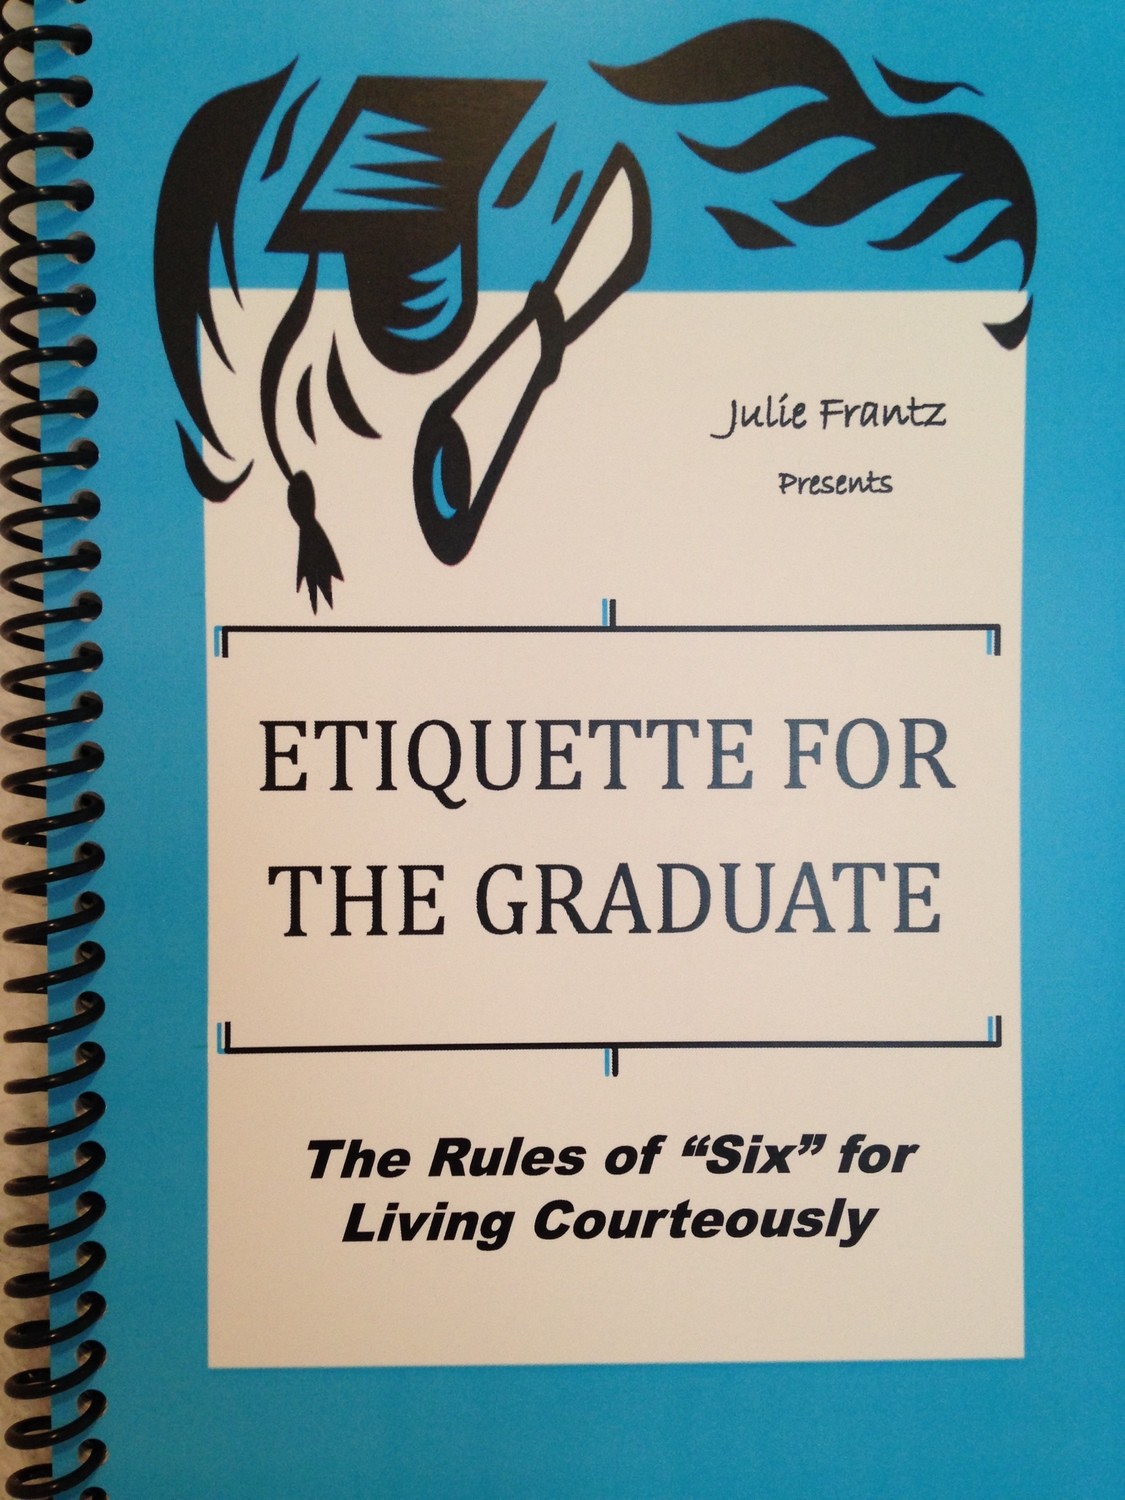 Etiquette for the graduate book cover